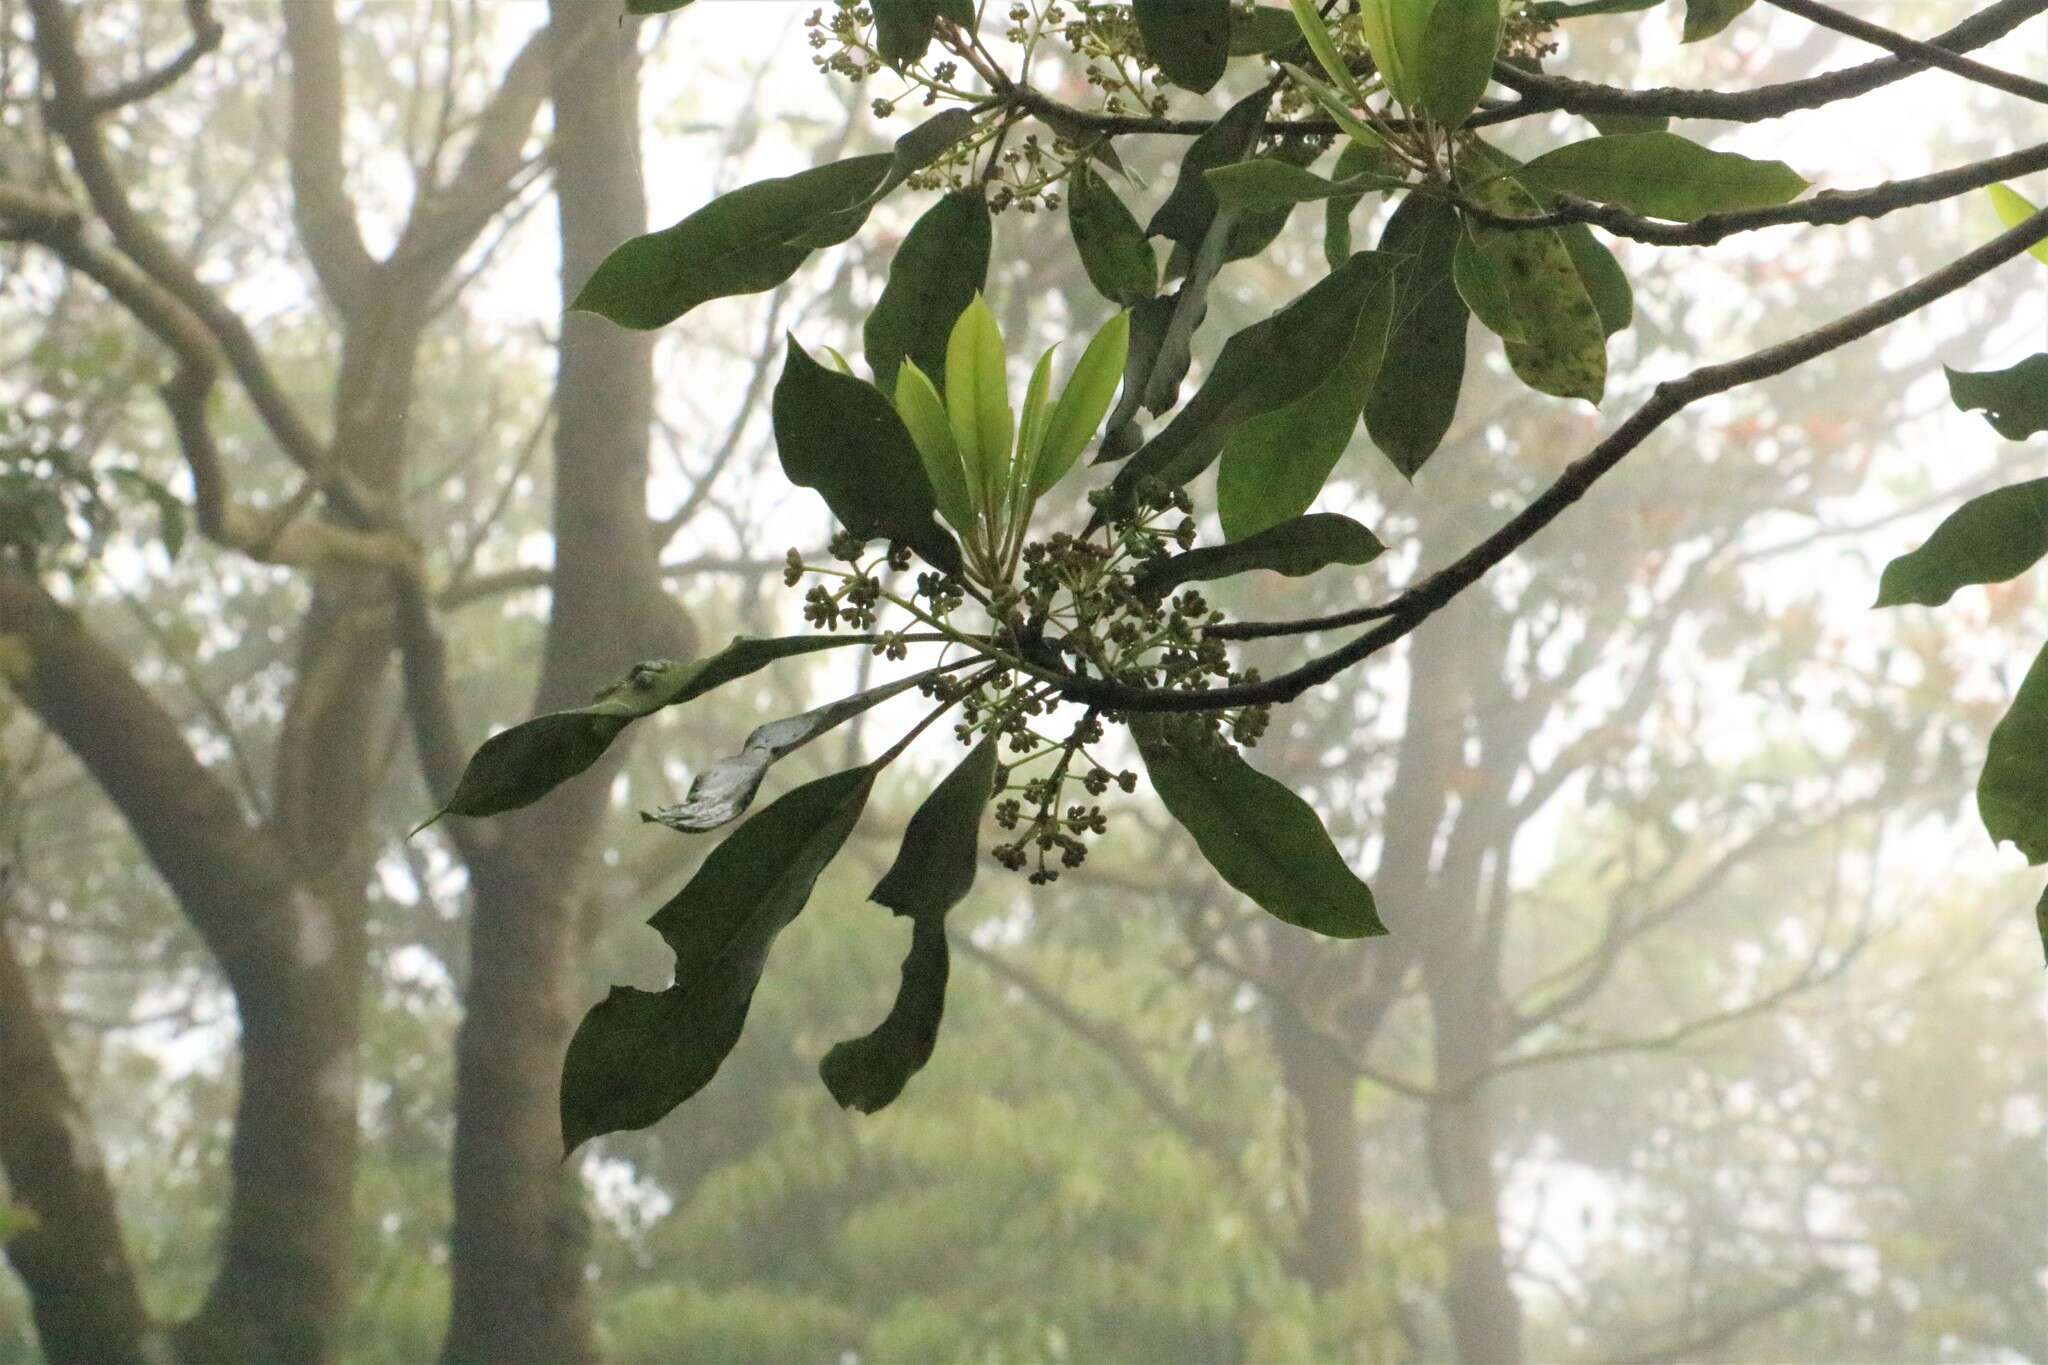 Image de Daphniphyllum pentandrum Hayata